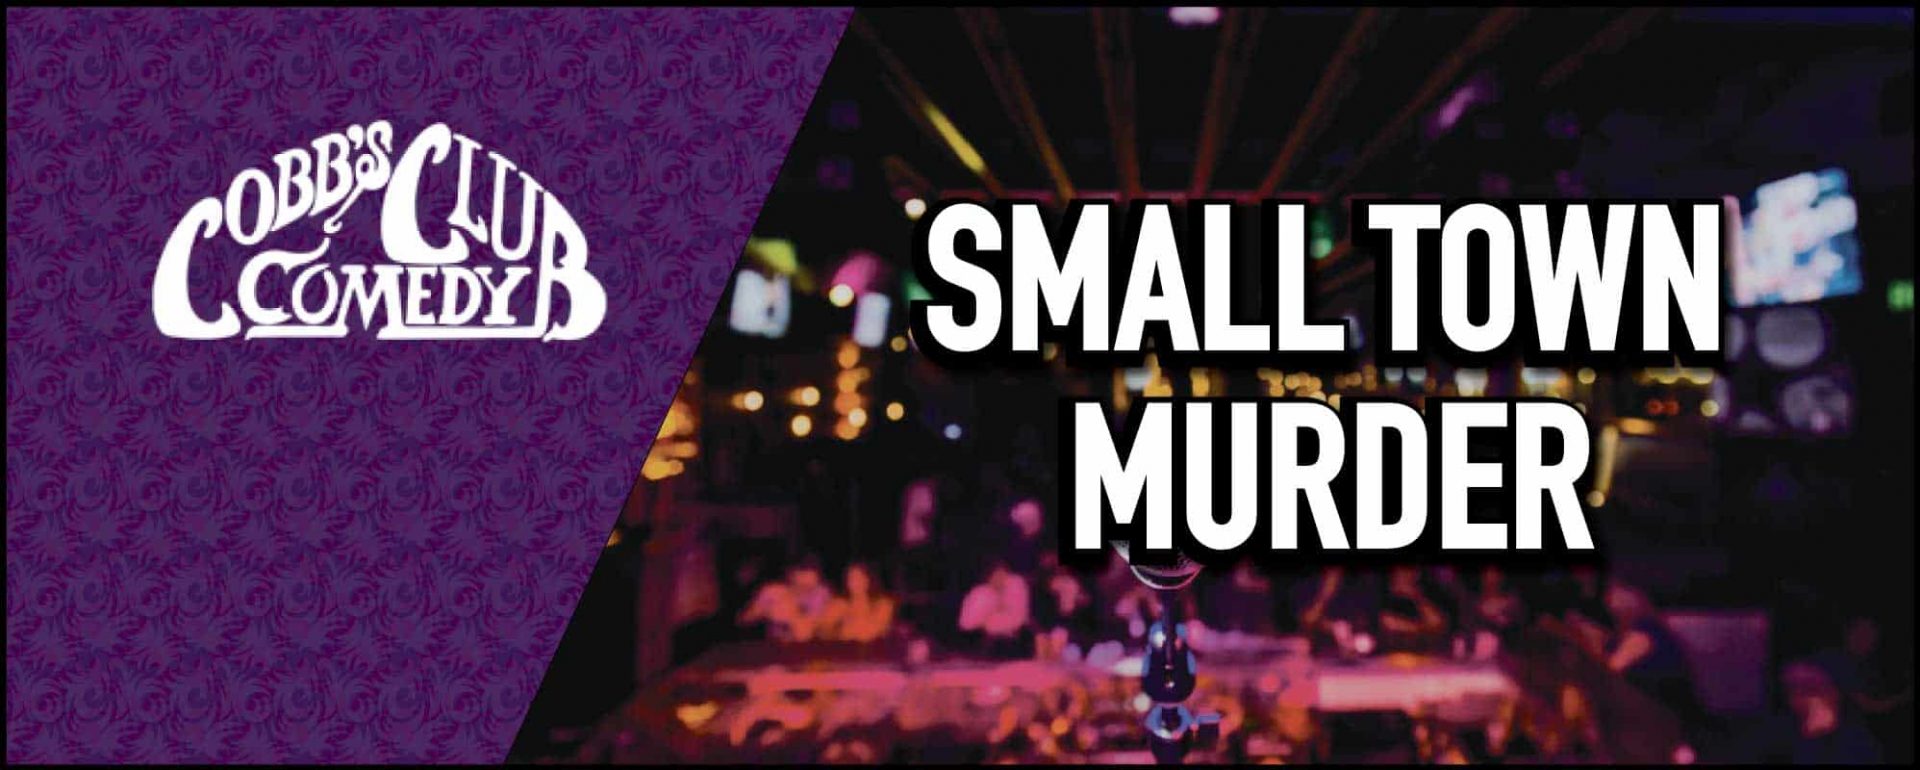 Small Town Murder at Cobbs Comedy Club